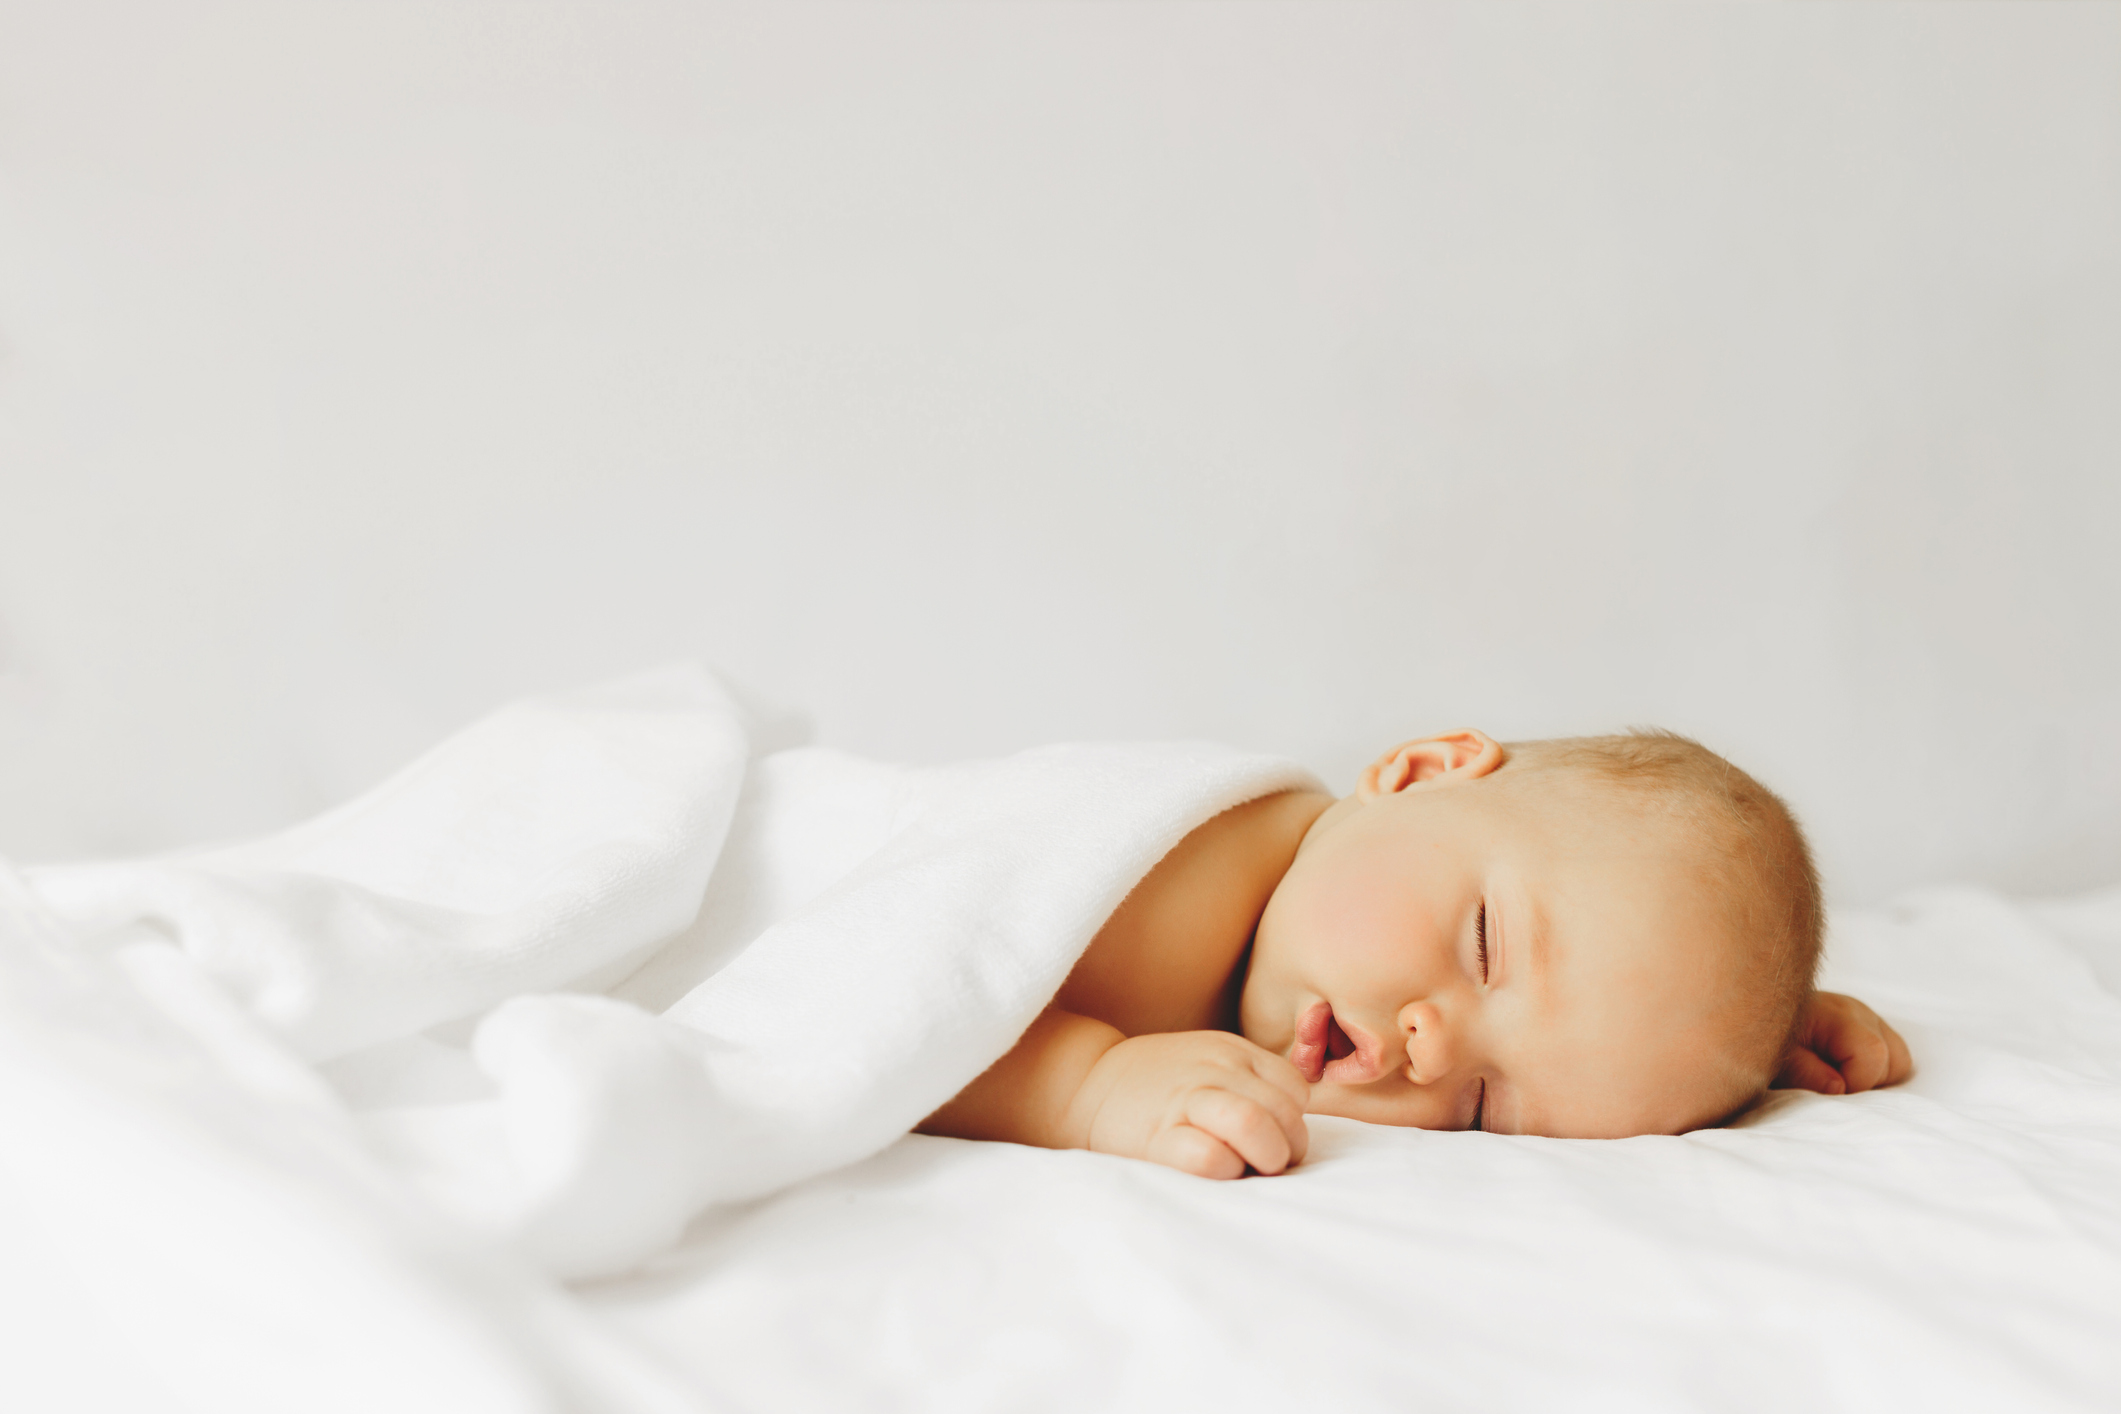 спать на животе, можно ли спать на животе, можно ли ребенку до года спать на животе, можно ли новорожденному спать на животе, безопасная поза для сна младенца